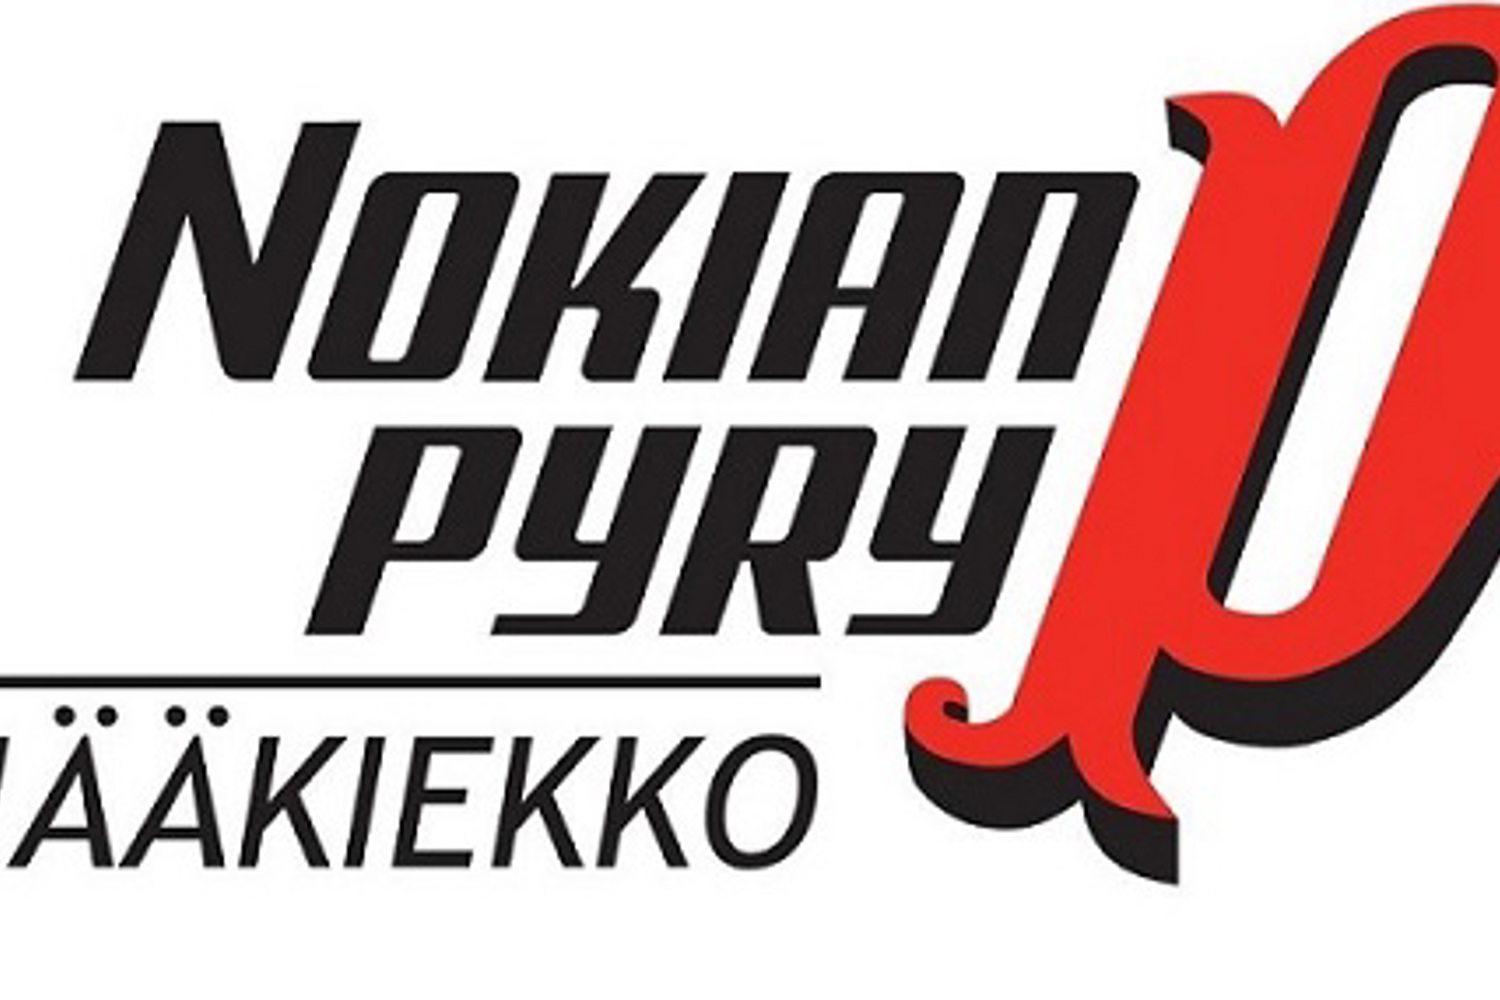 Nokian Pyry